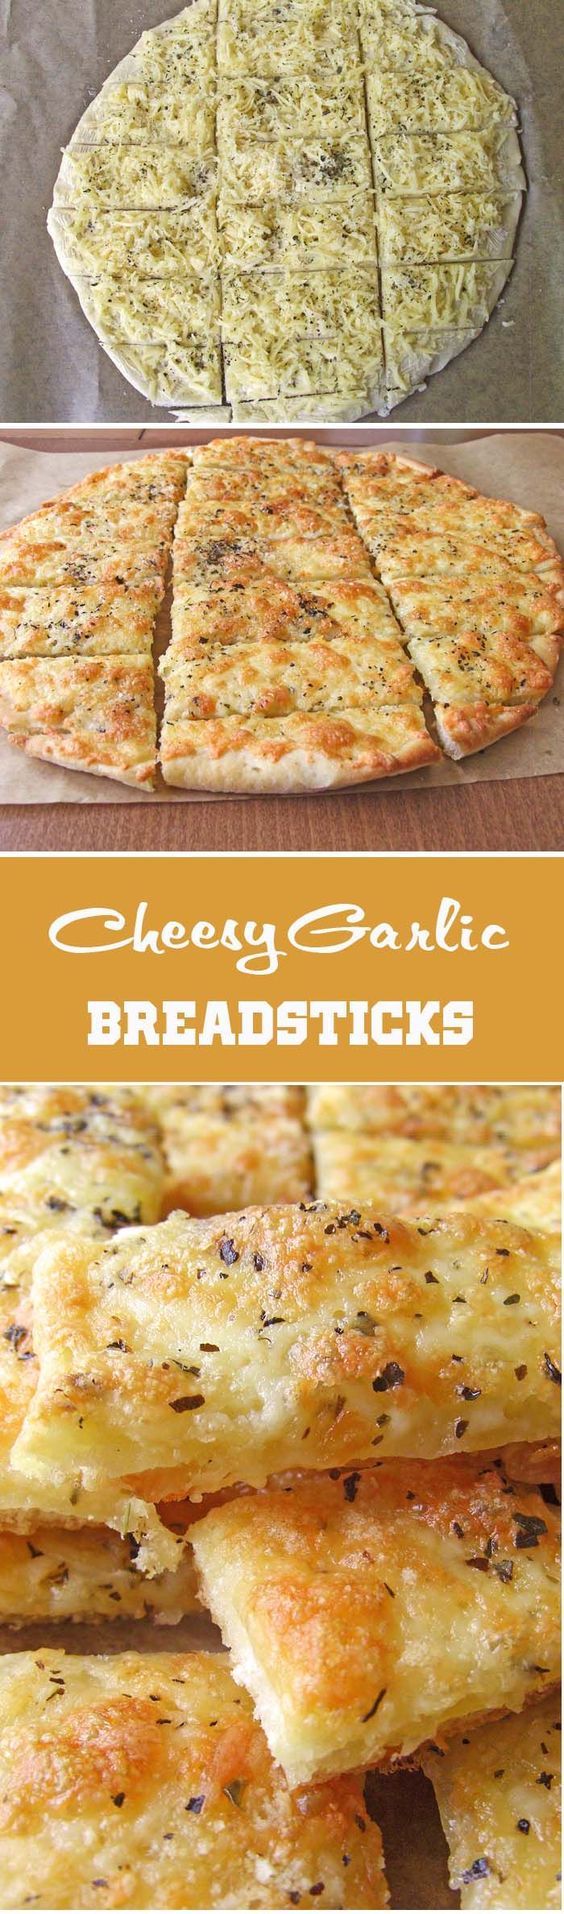 http://sugarapron.com/2014/08/03/easy-cheesy-garlic-breadsticks/